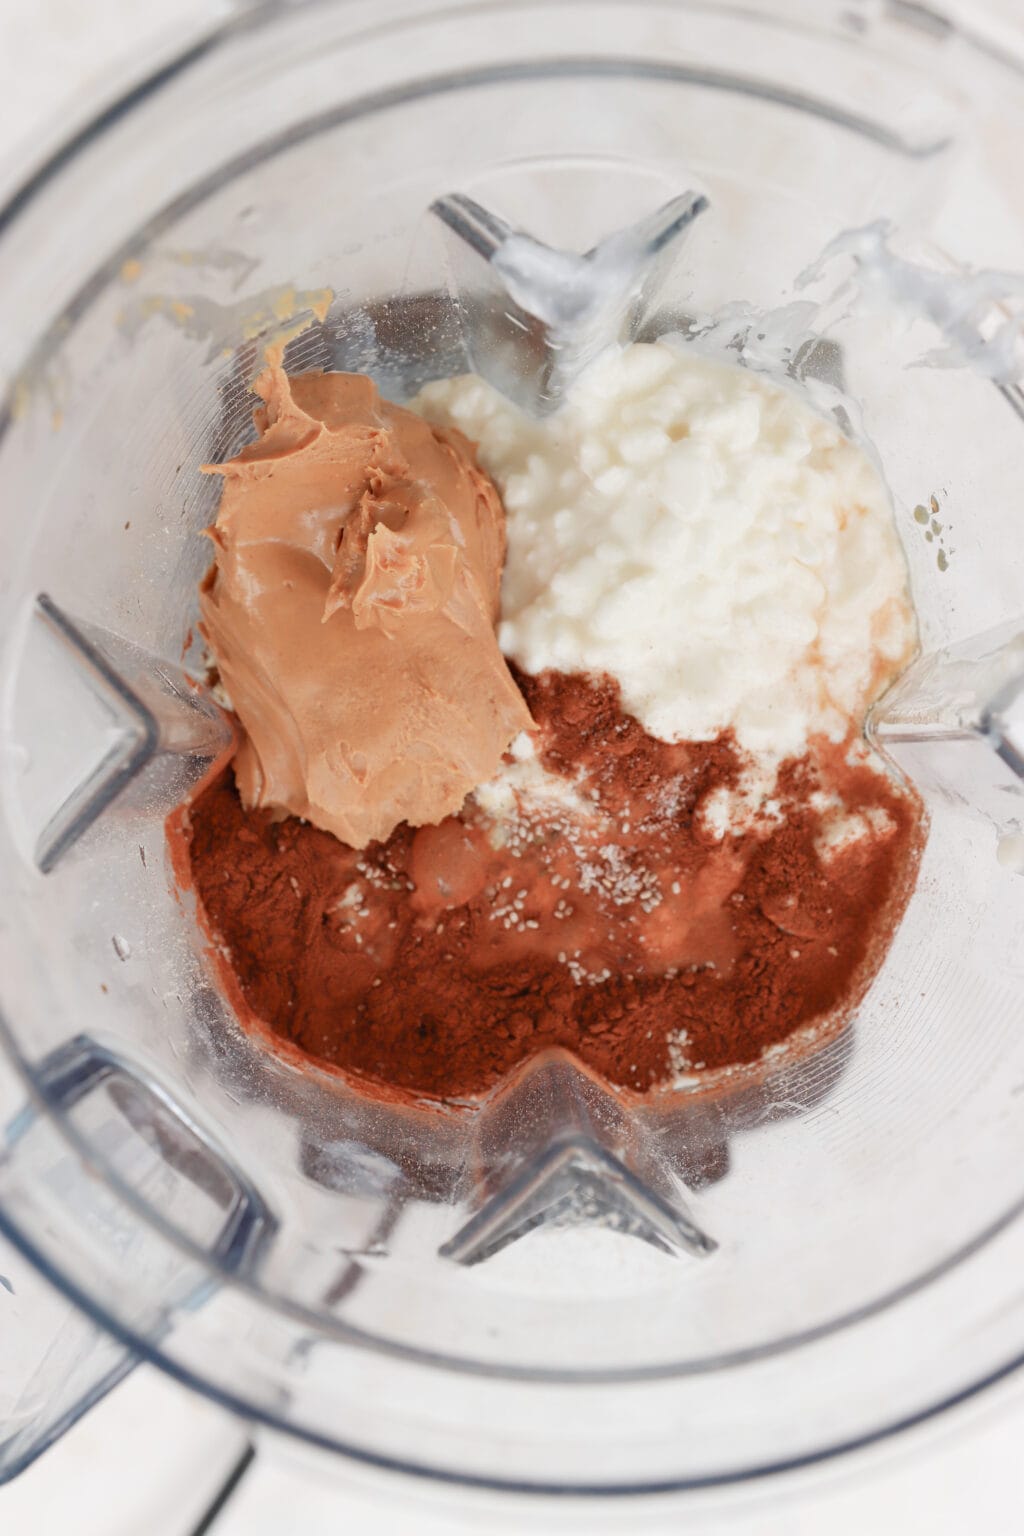 Simple 5-Minute Creamy Overnight Oats Meal Prep Base Recipe - Lindsay  Pleskot, RD